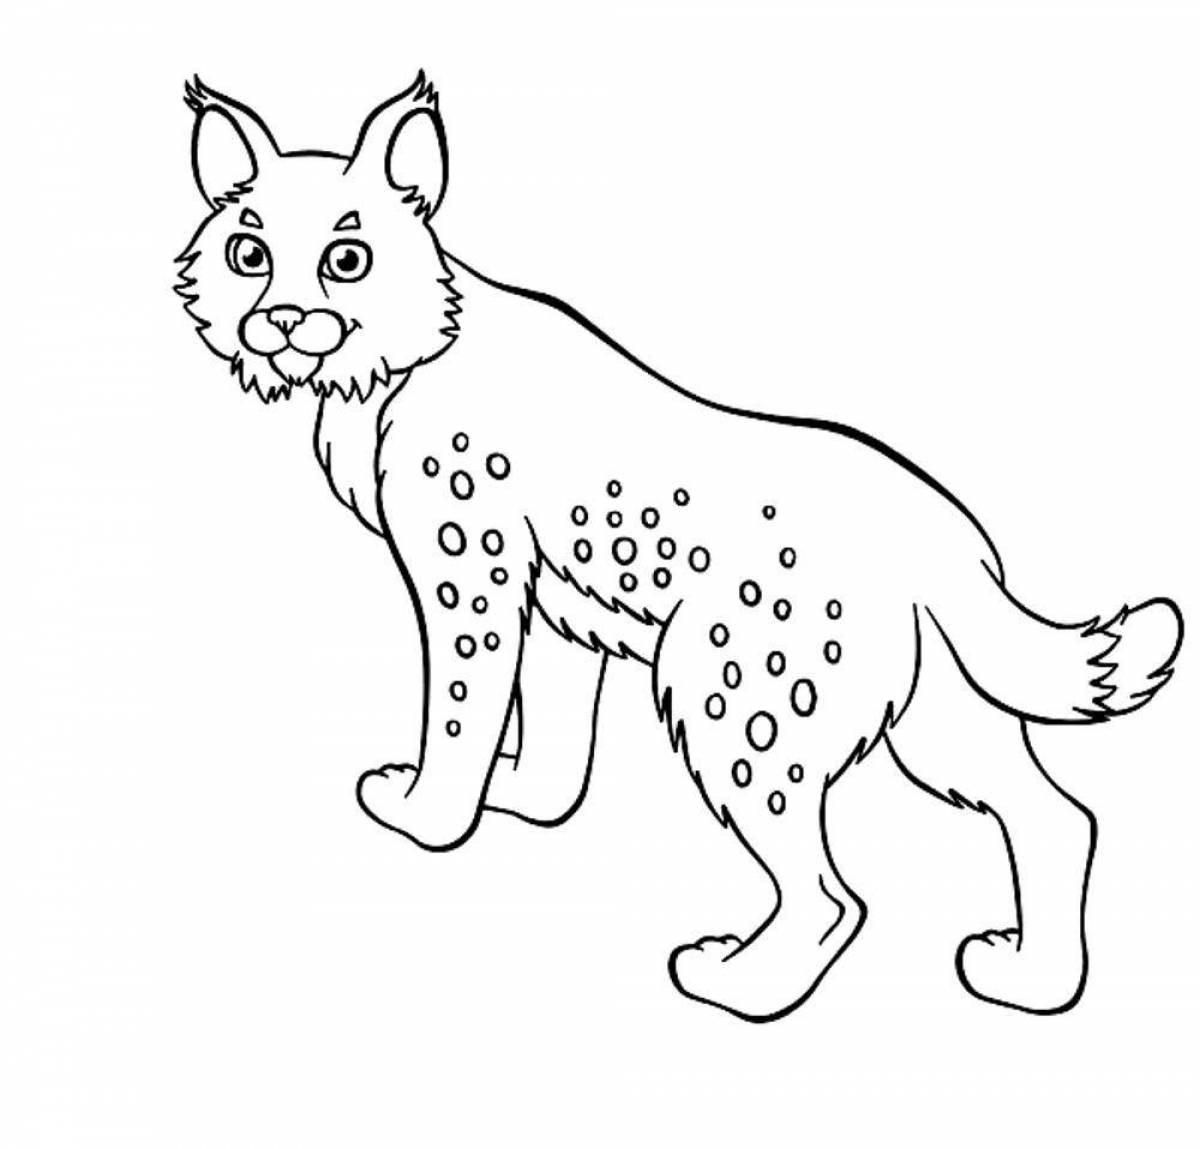 Fun lynx coloring for kids